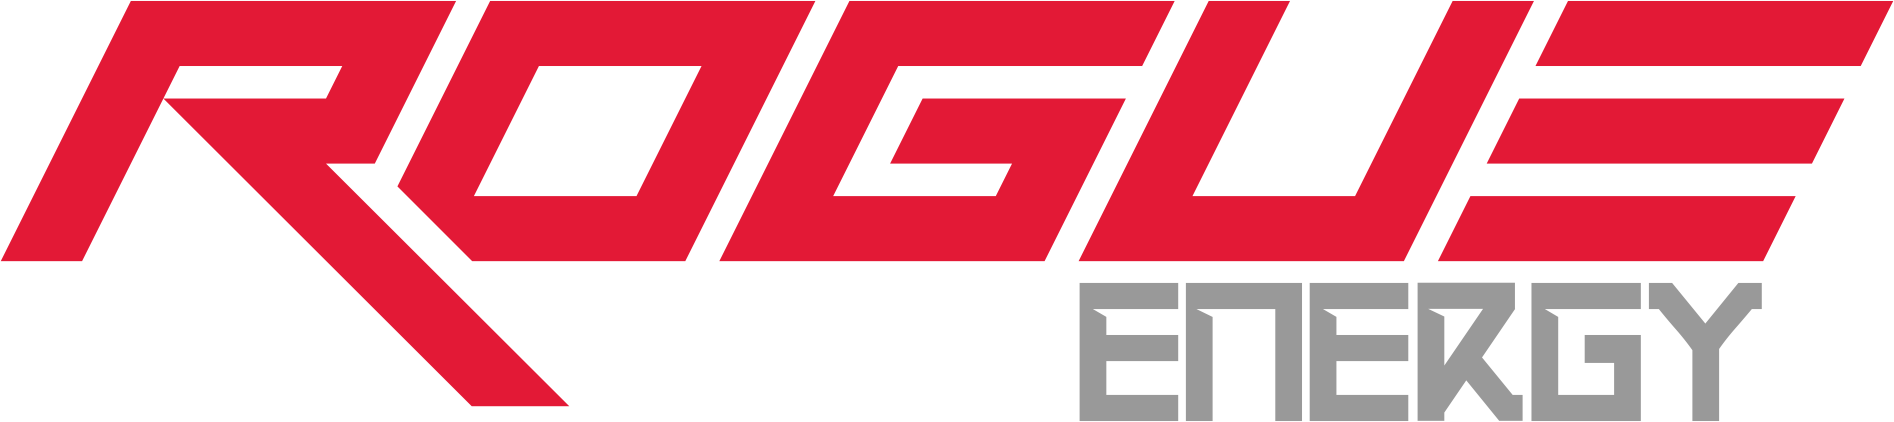 Logo - Rogue Energy (1894x422)